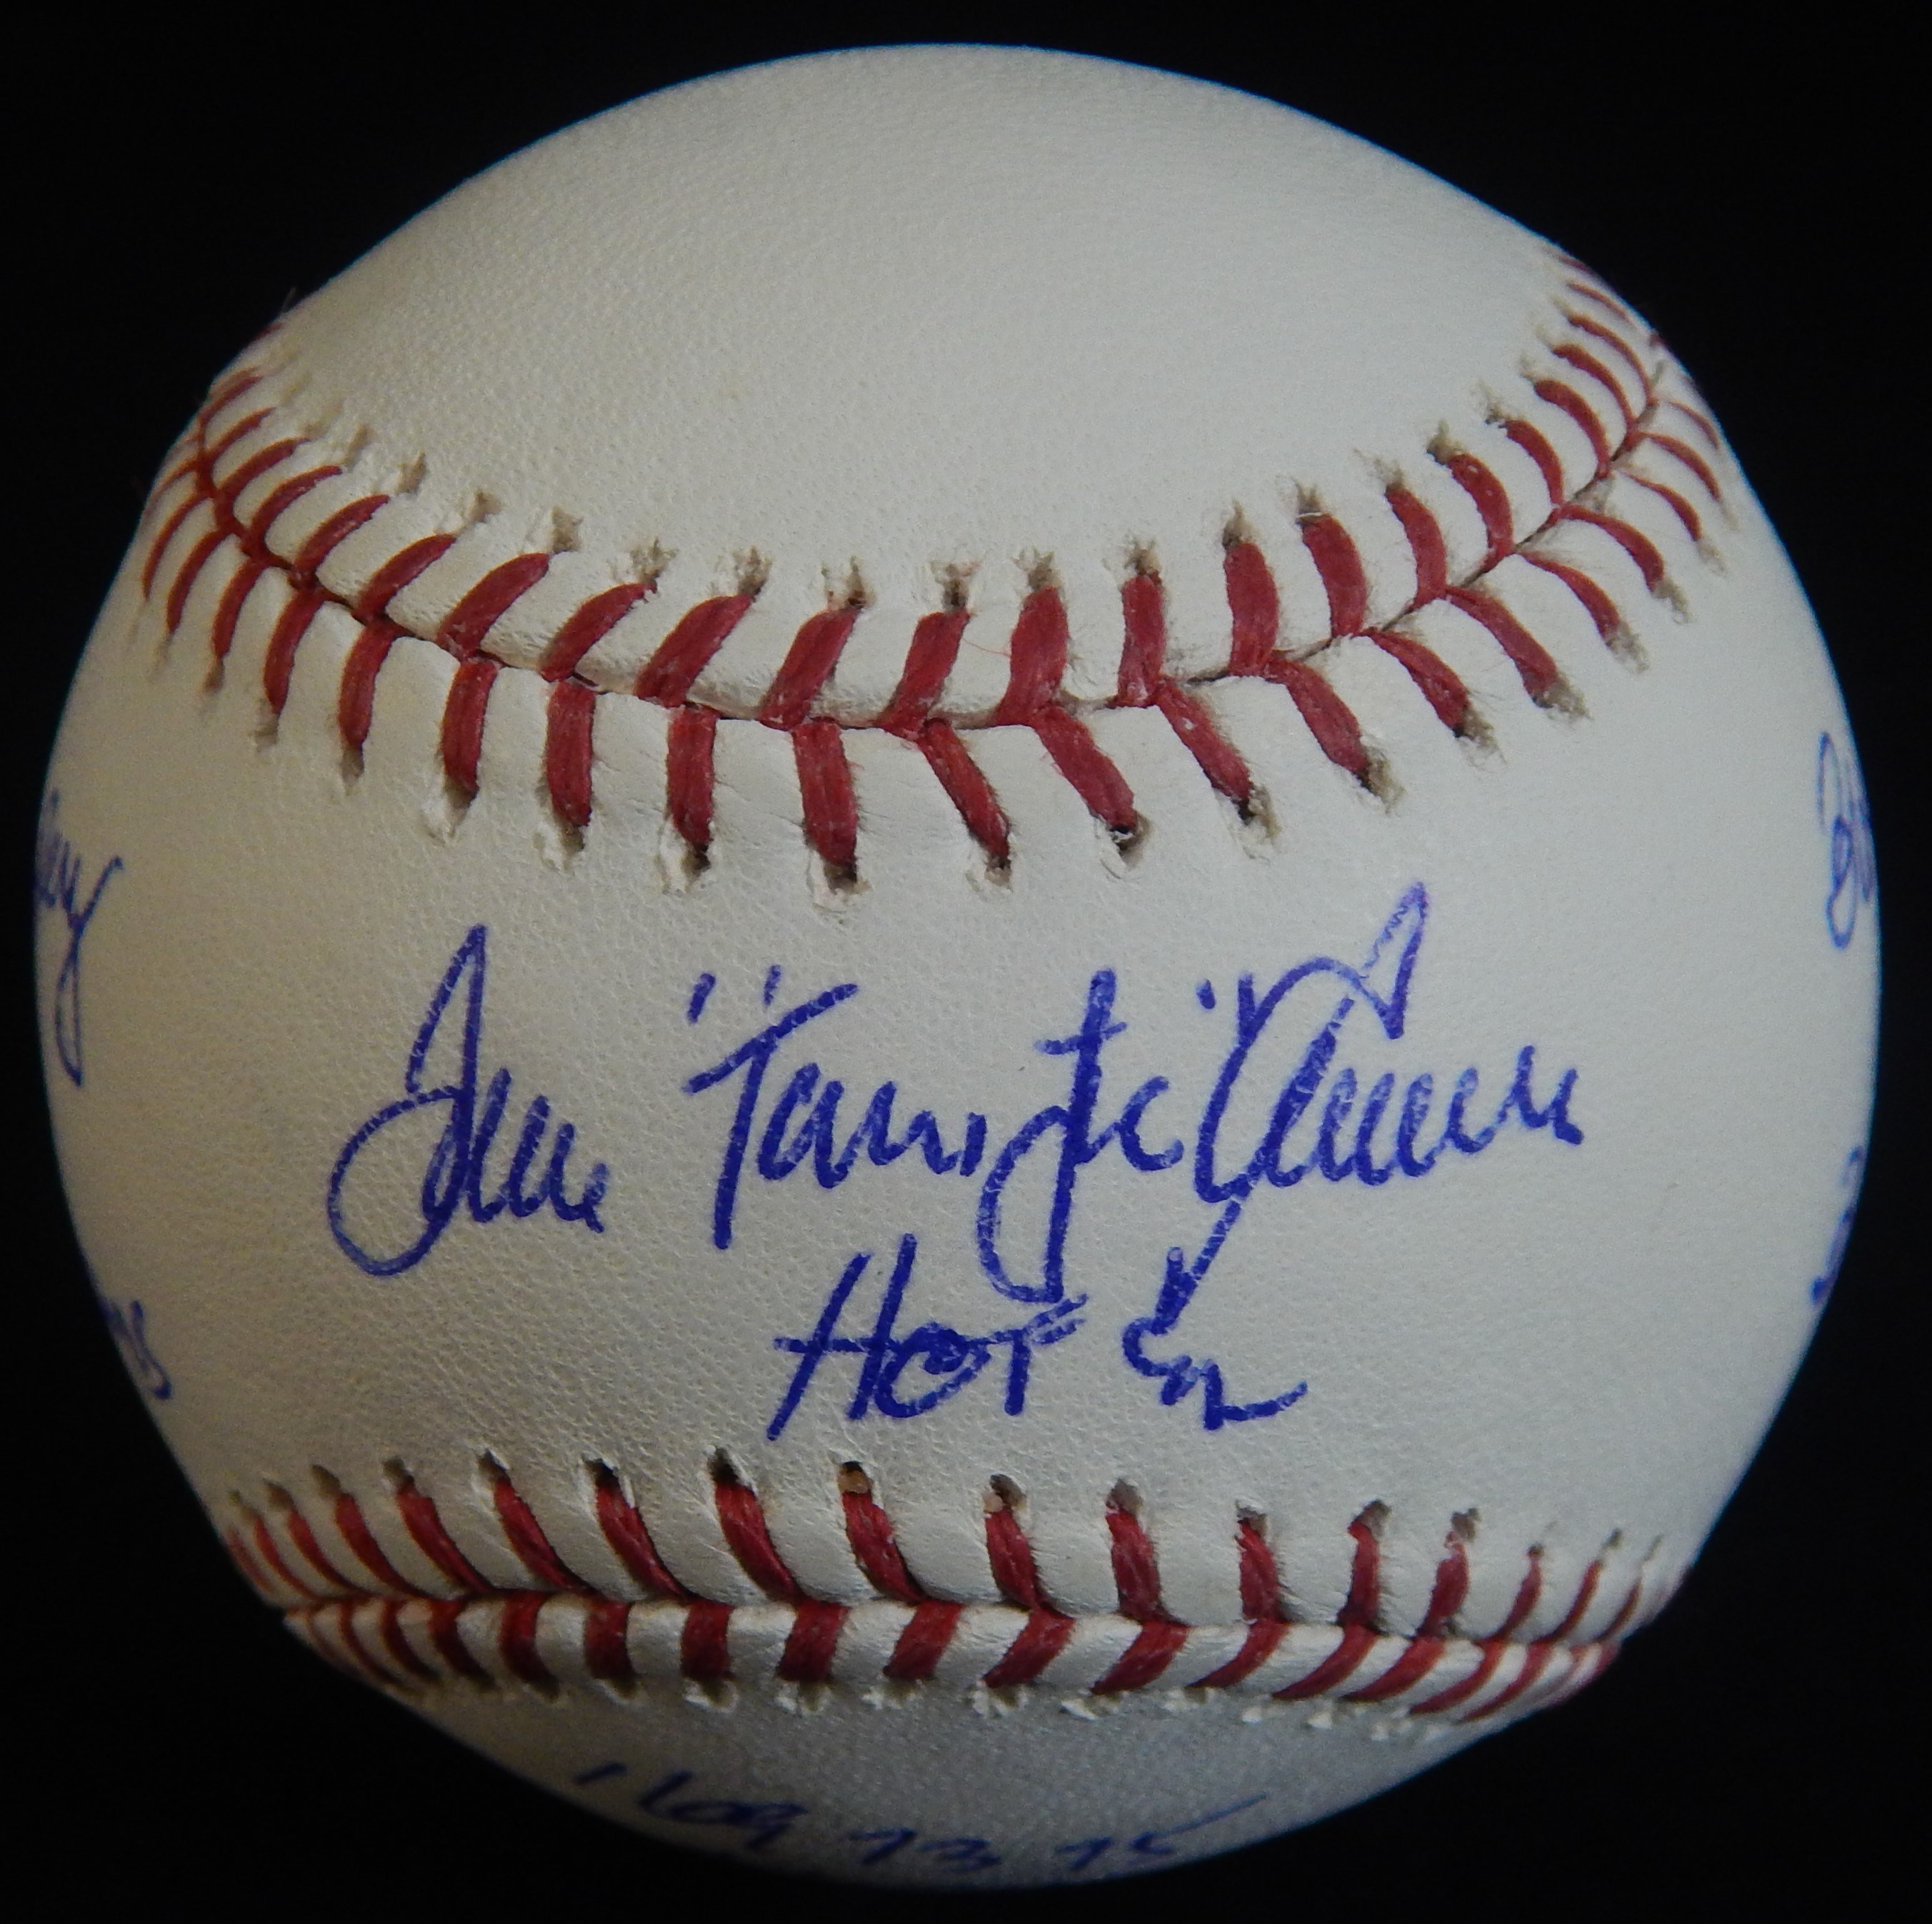 Baseball Autographs - Tom "Terrific" Seaver Multiple Stat Notation Single Signed Baseball - PSA/DNA